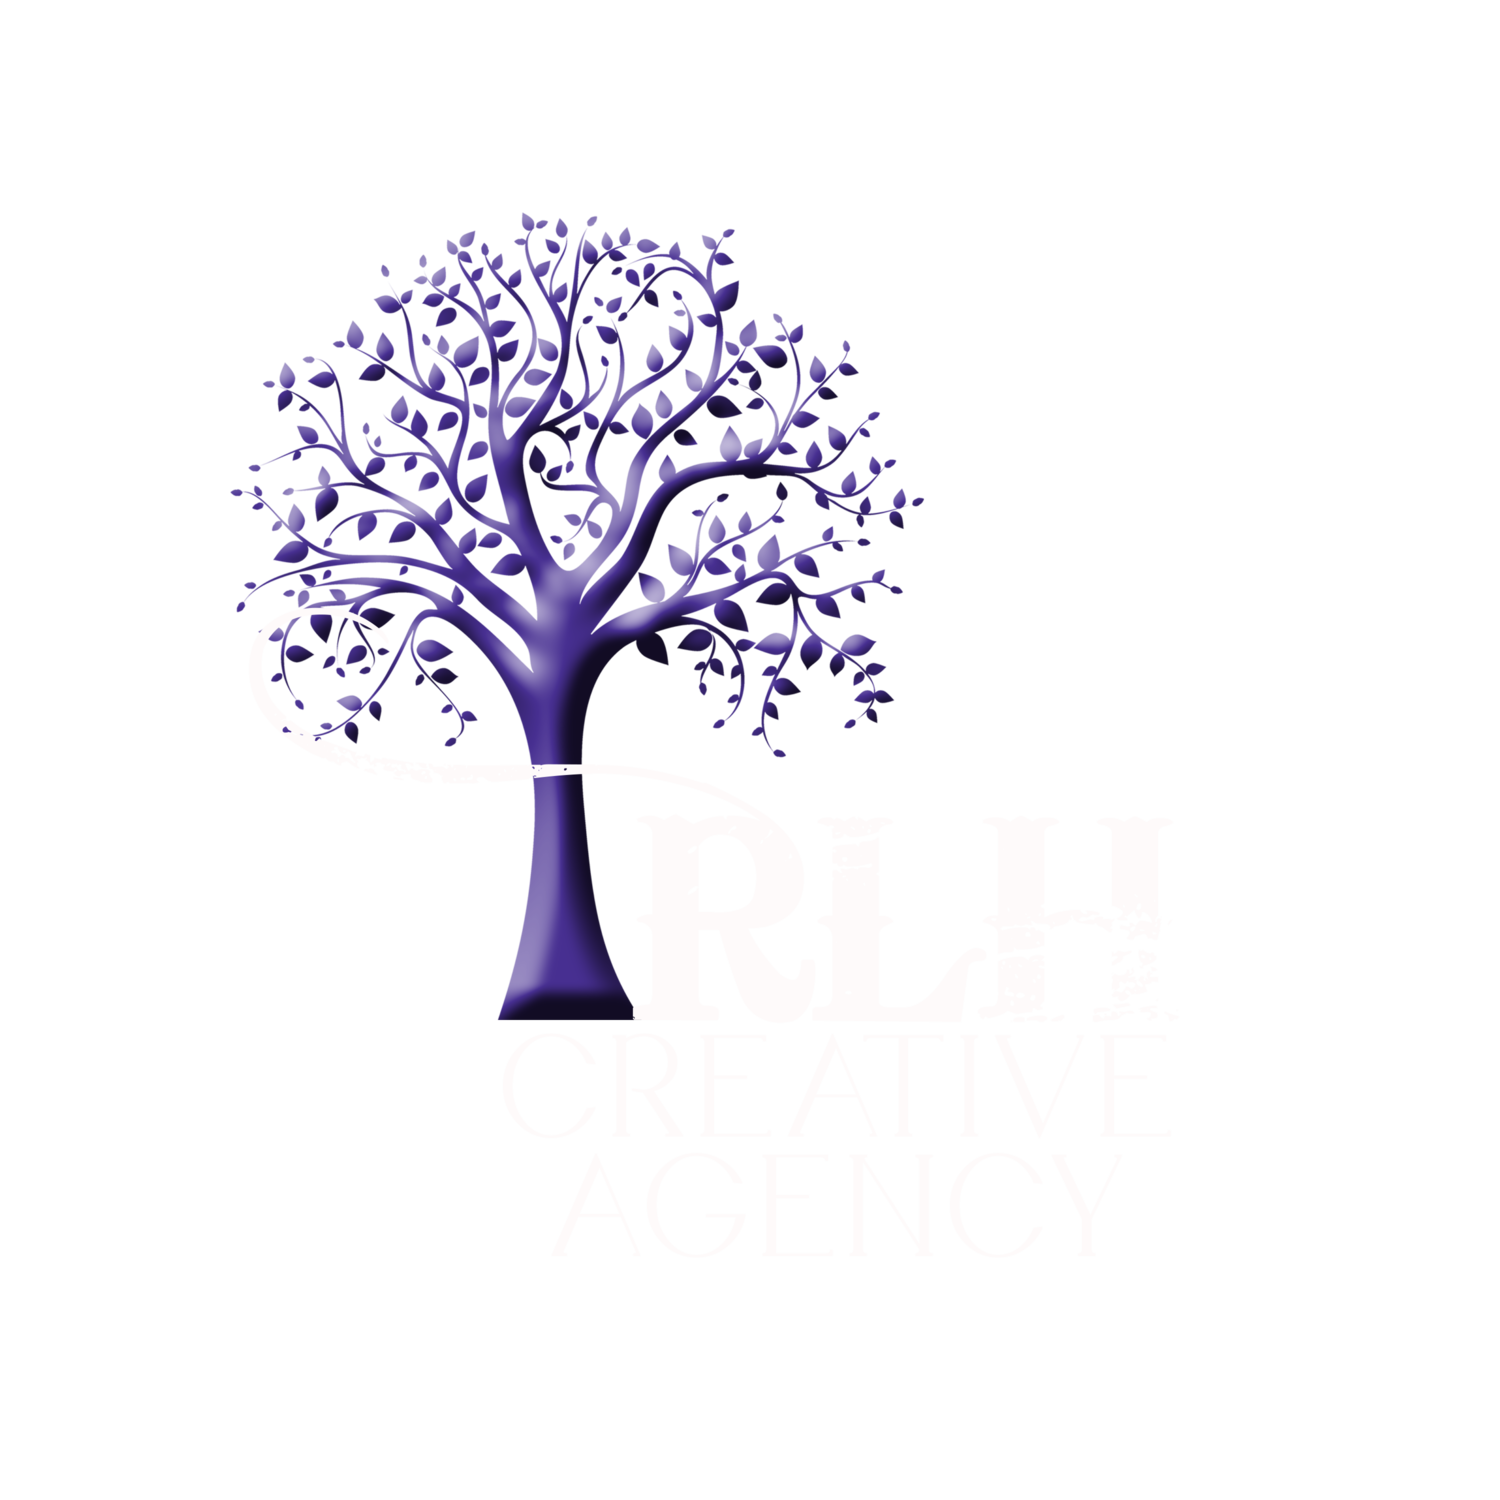 RLH Creative Agency